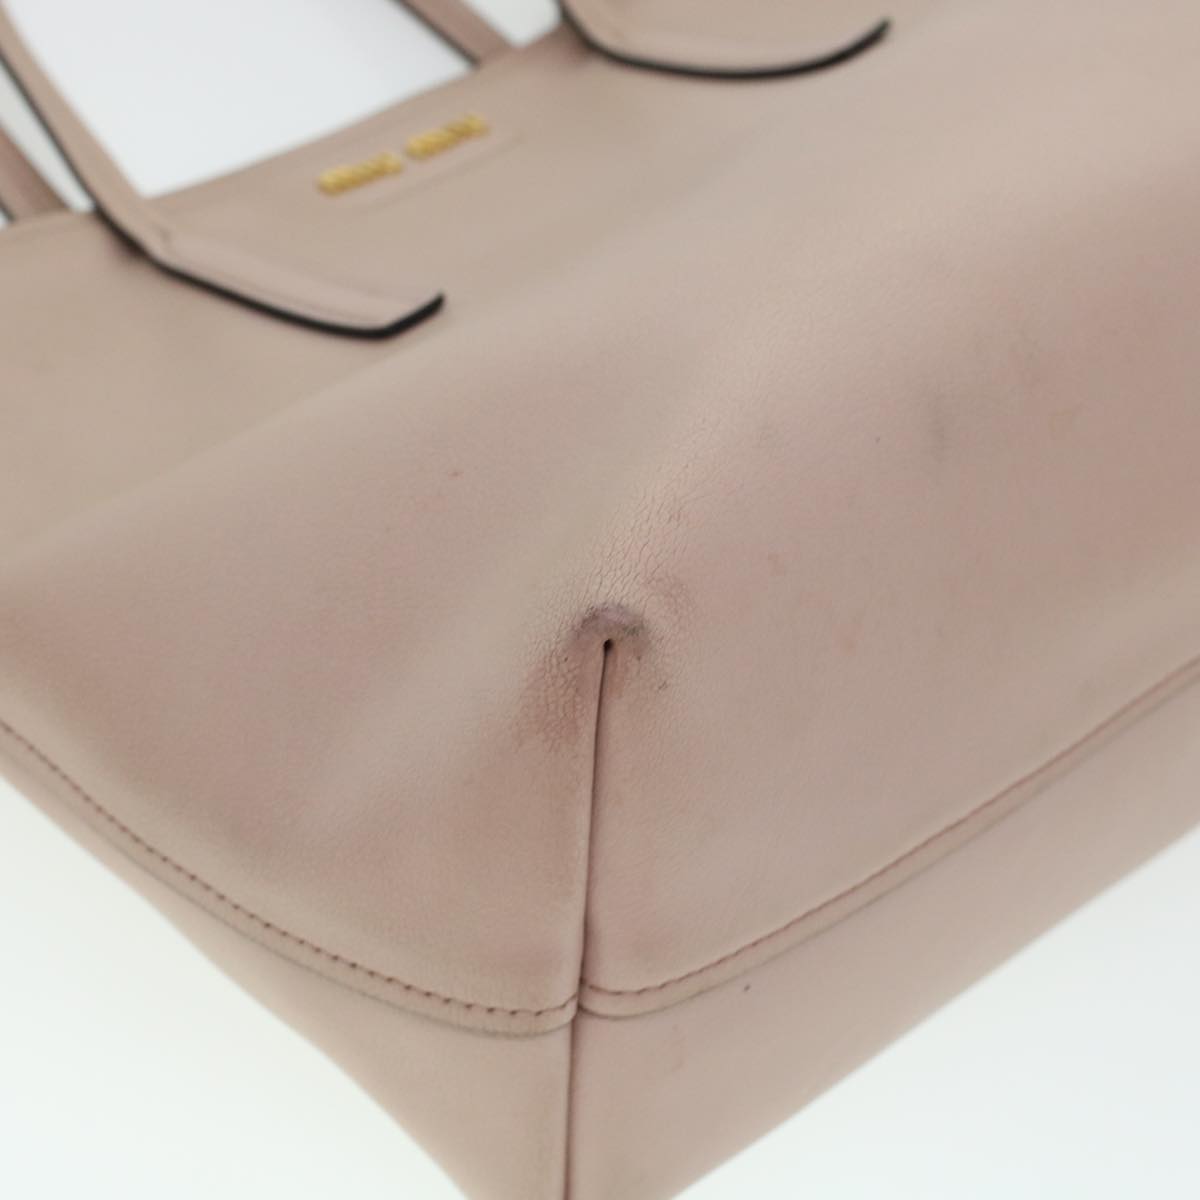 Miu Miu Tote Bag Leather Pink Auth 41351